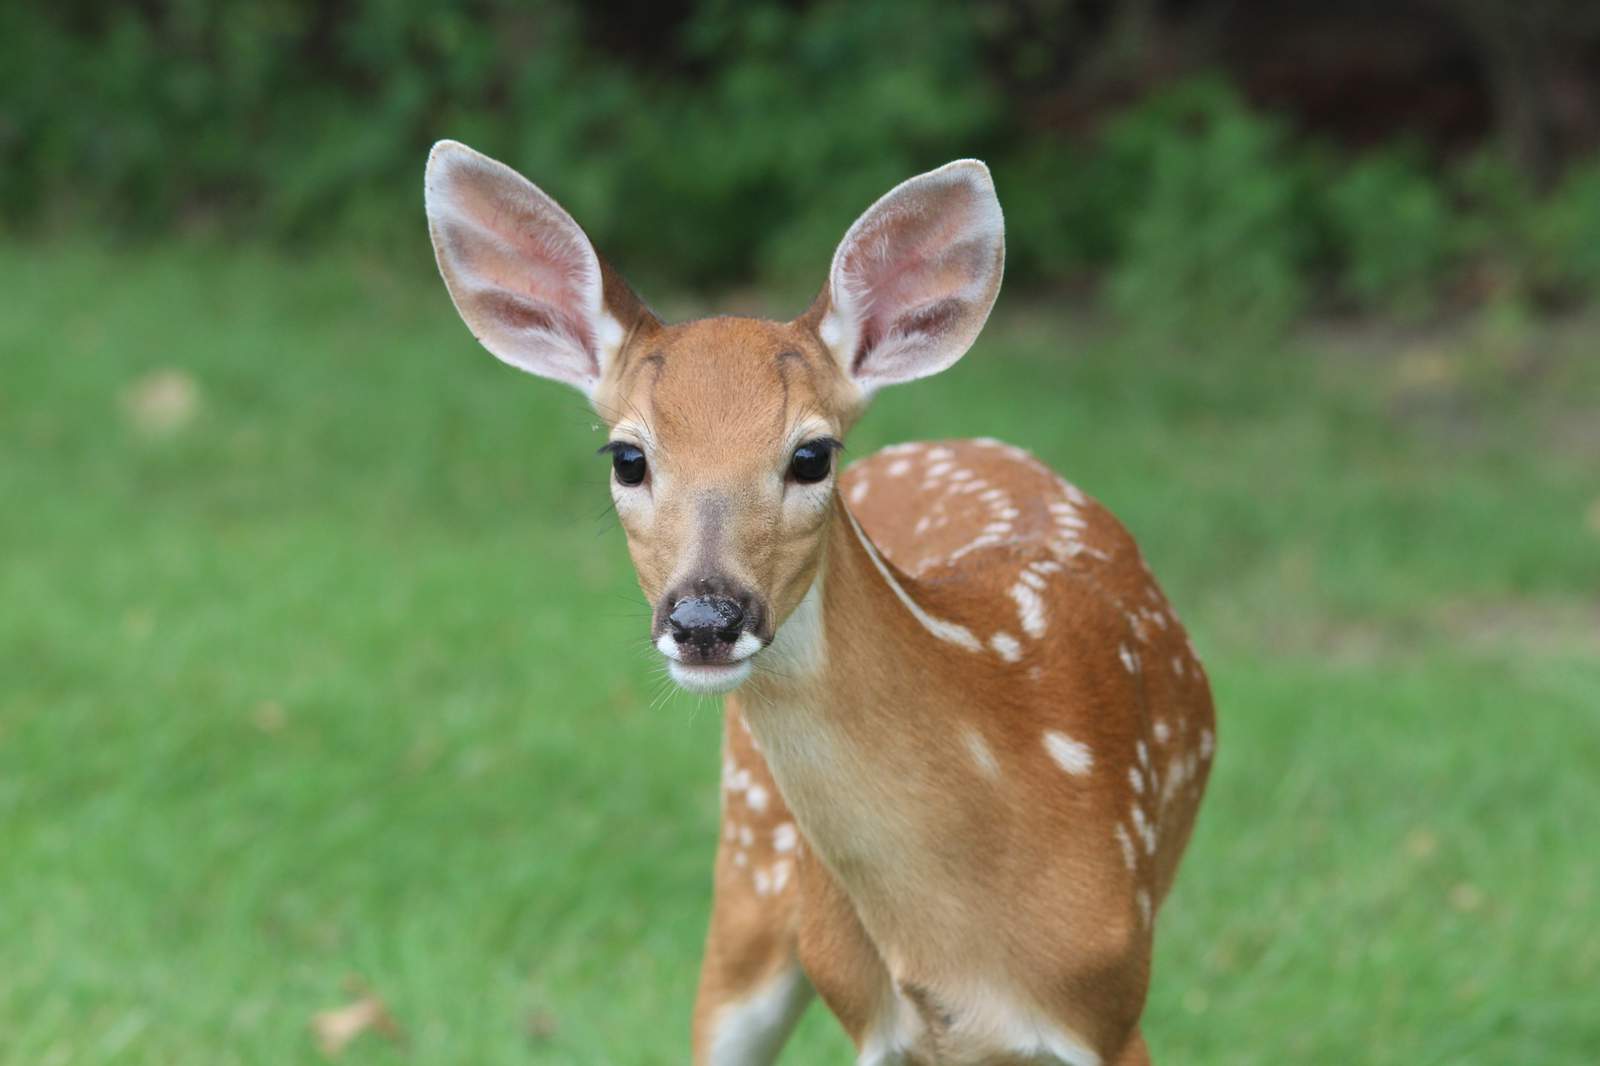 ‘Deer Doctor’ to visit Ann Arbor virtually in April